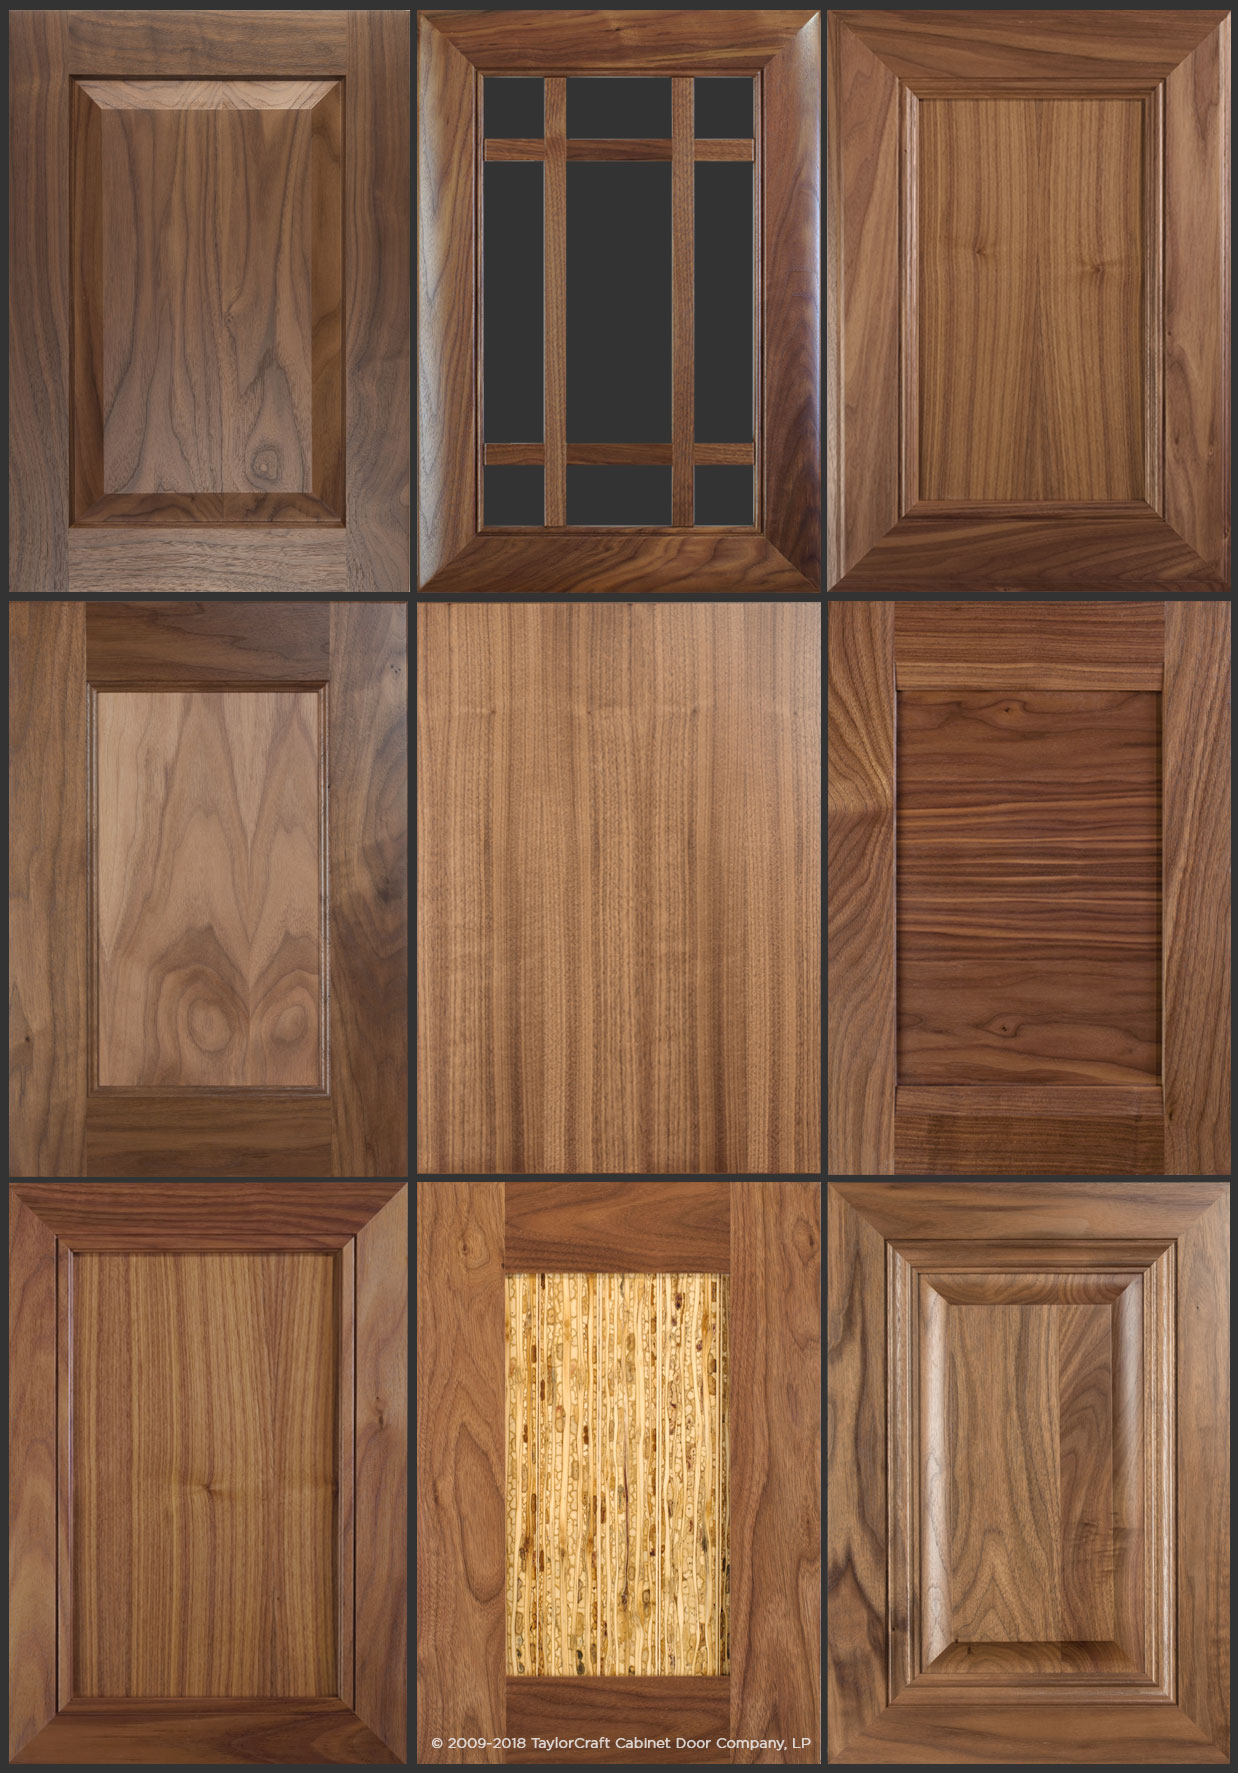 Walnut Cabinet Doors and Kitchen Cabinets - TaylorCraft Cabinet Door Company